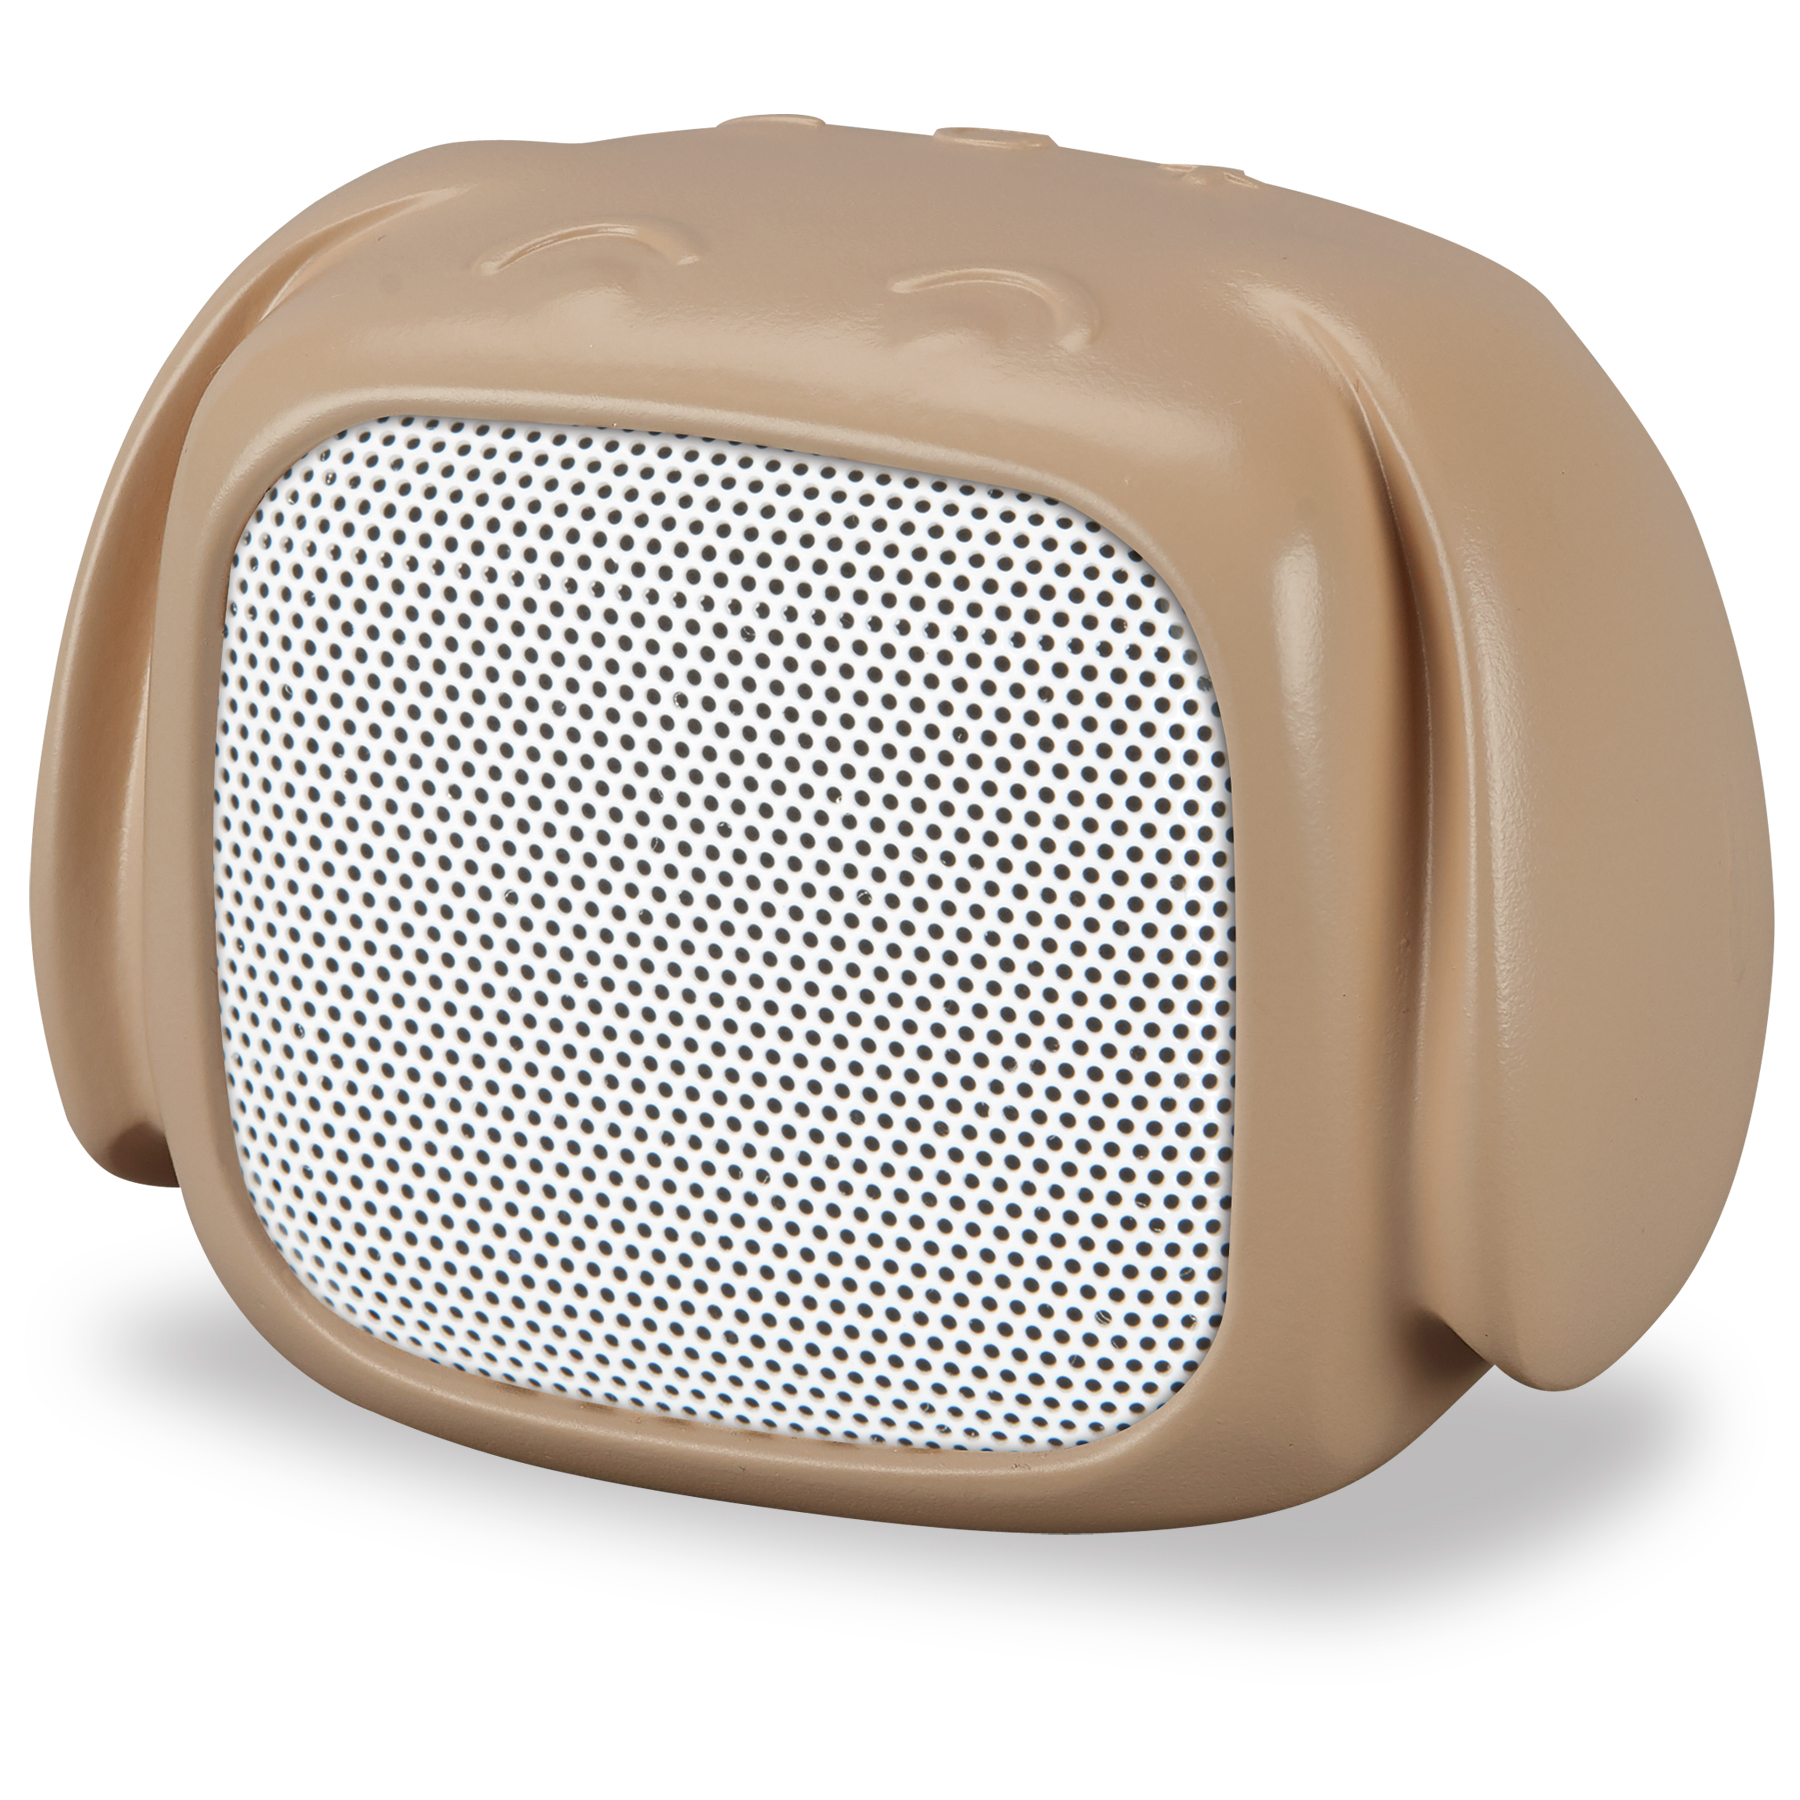 iLive Wild Tailz Wireless Dog Speaker, ISB19DOG - image 4 of 4